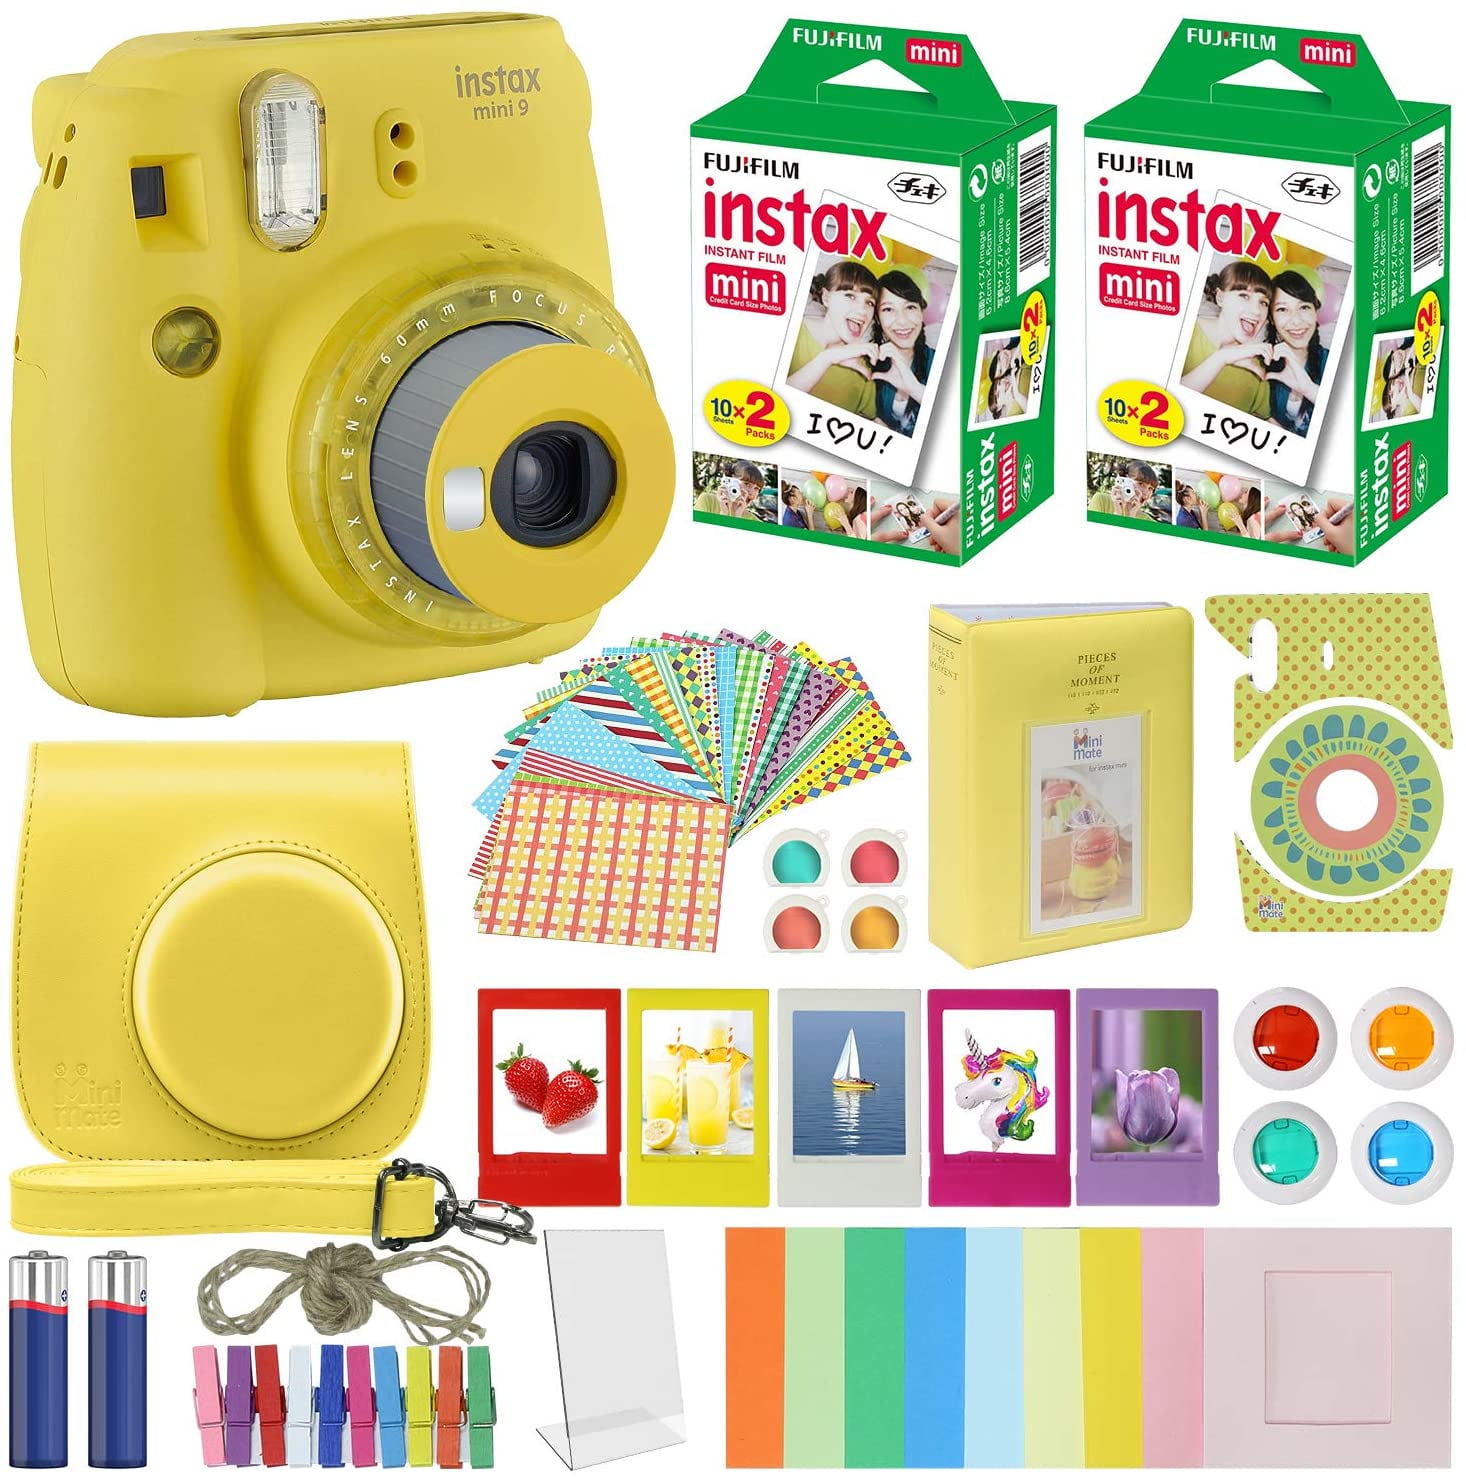 Natura Mangler flamme Fujifilm Instax Mini 9 Fuji Instant Film Camera Clear Yellow + 40 Film  Deluxe Bundle - Walmart.com